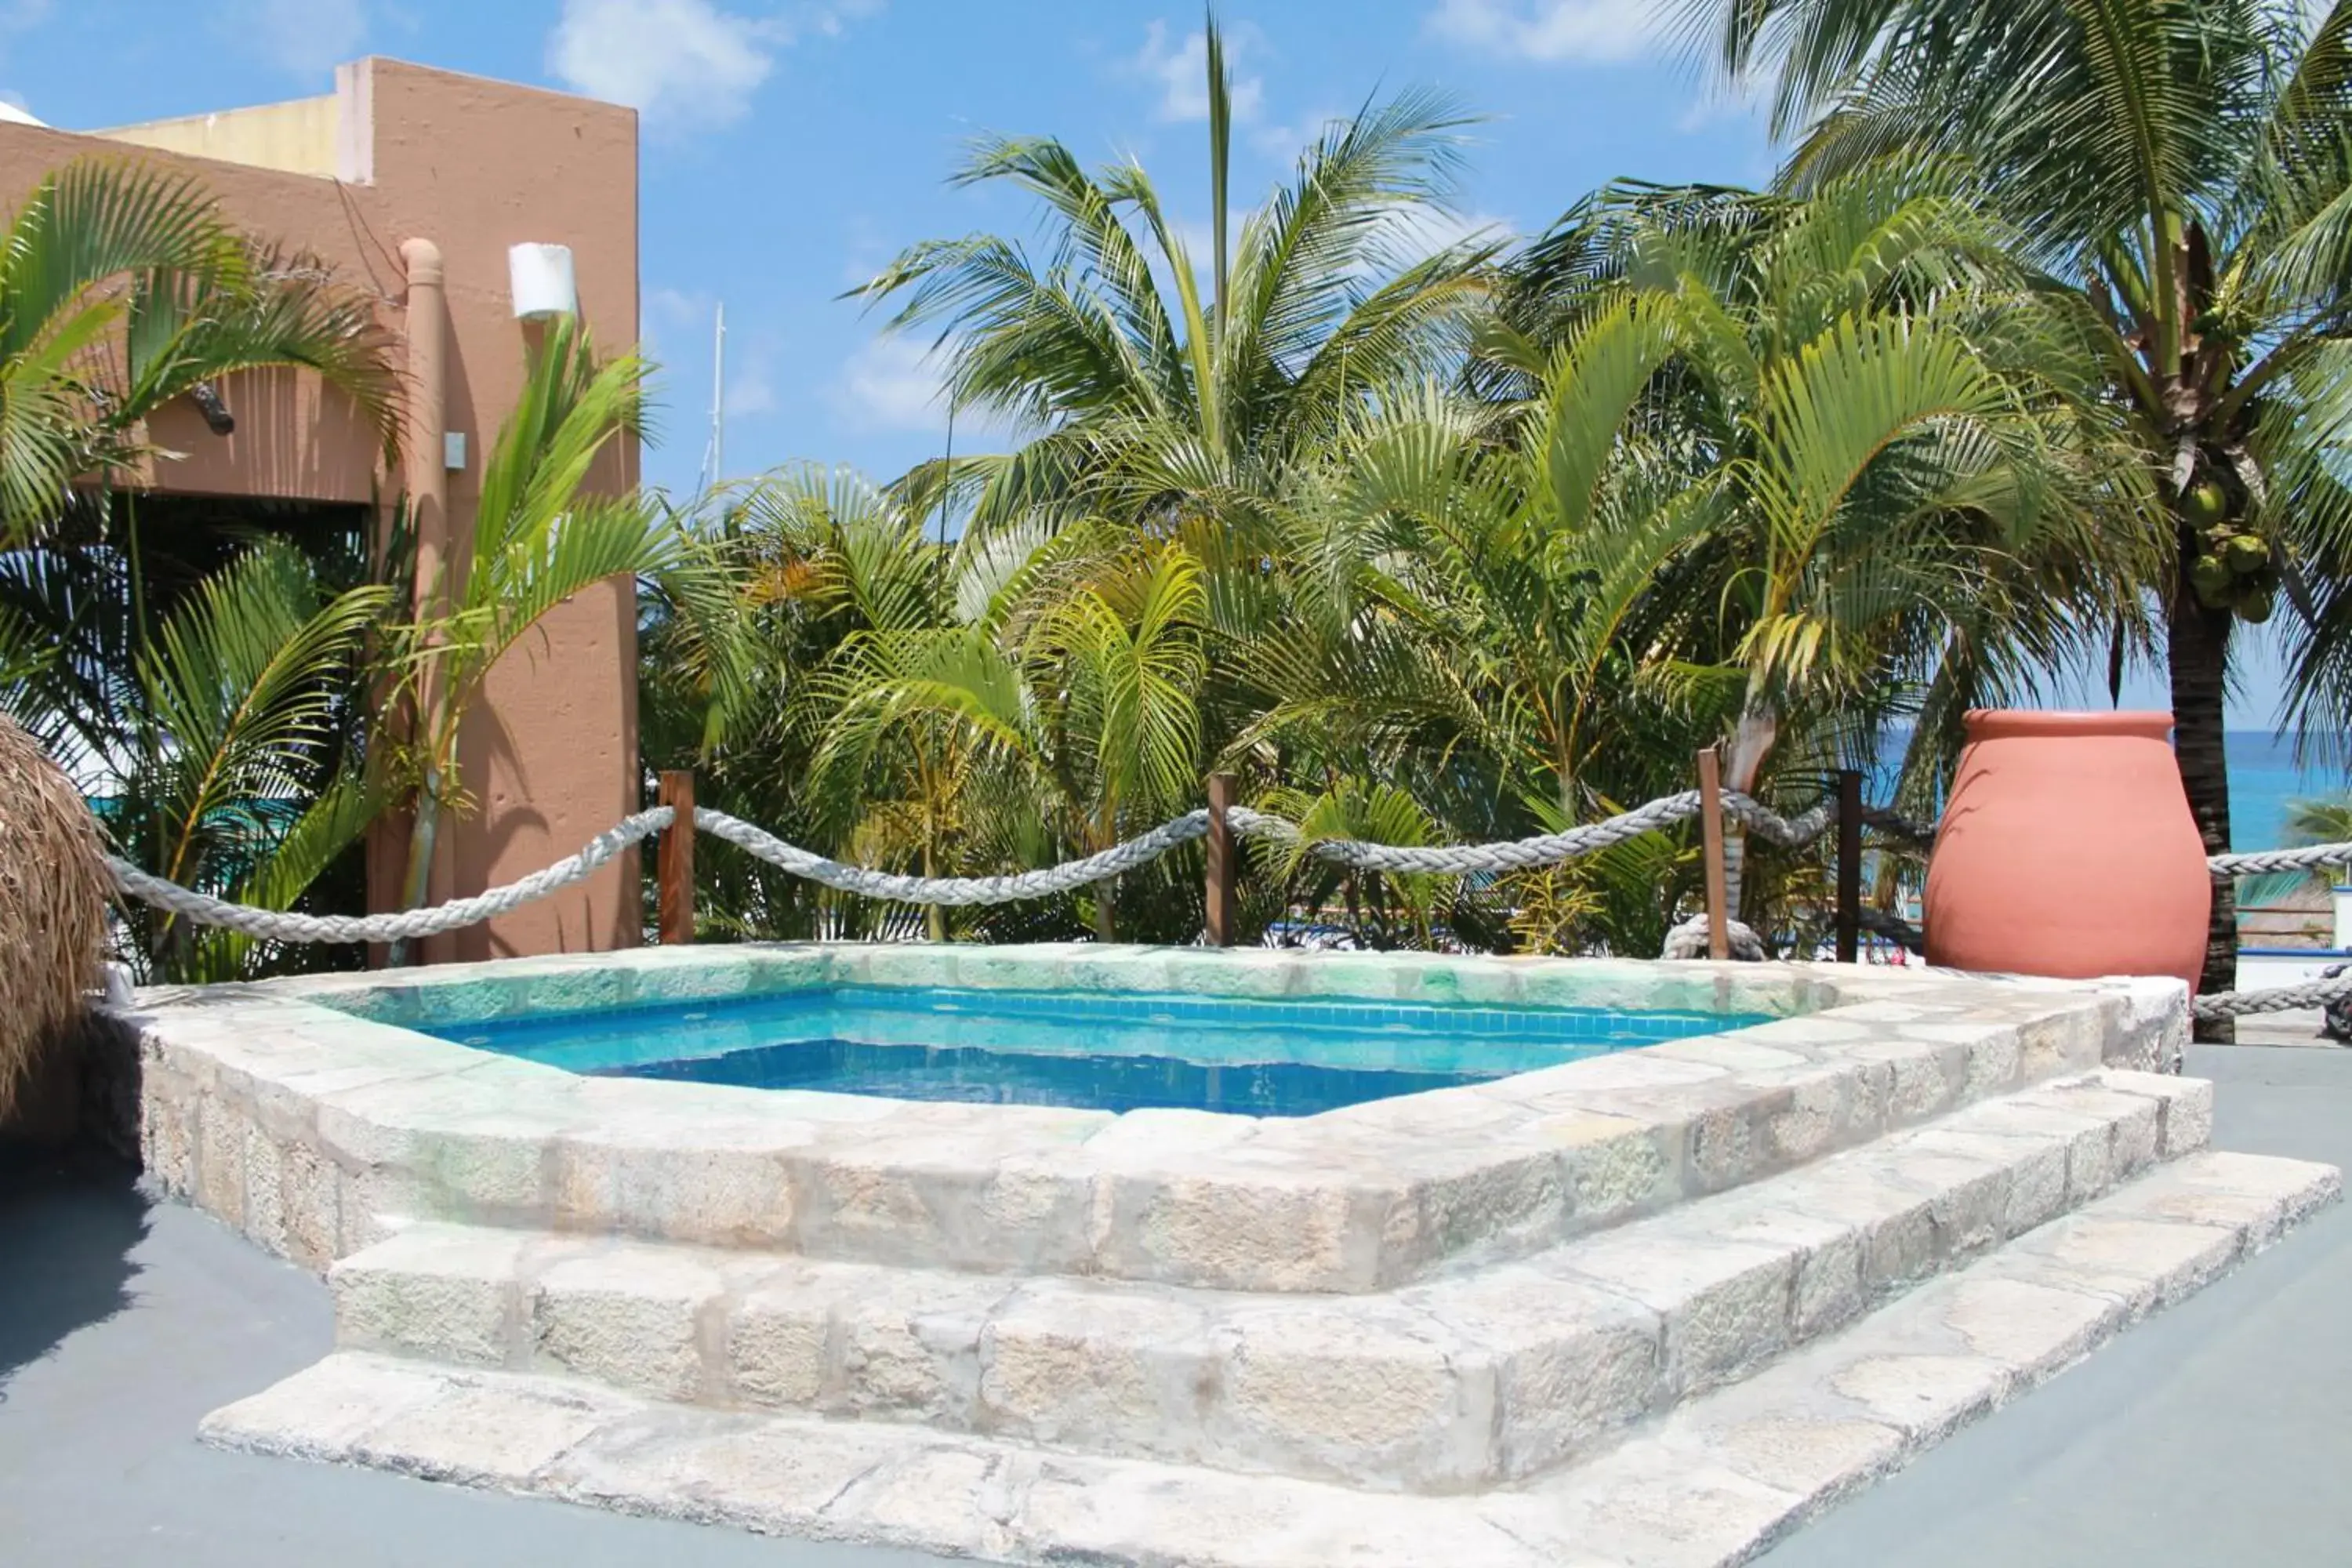 Hot Tub, Swimming Pool in Casa del Mar Cozumel Hotel & Dive Resort